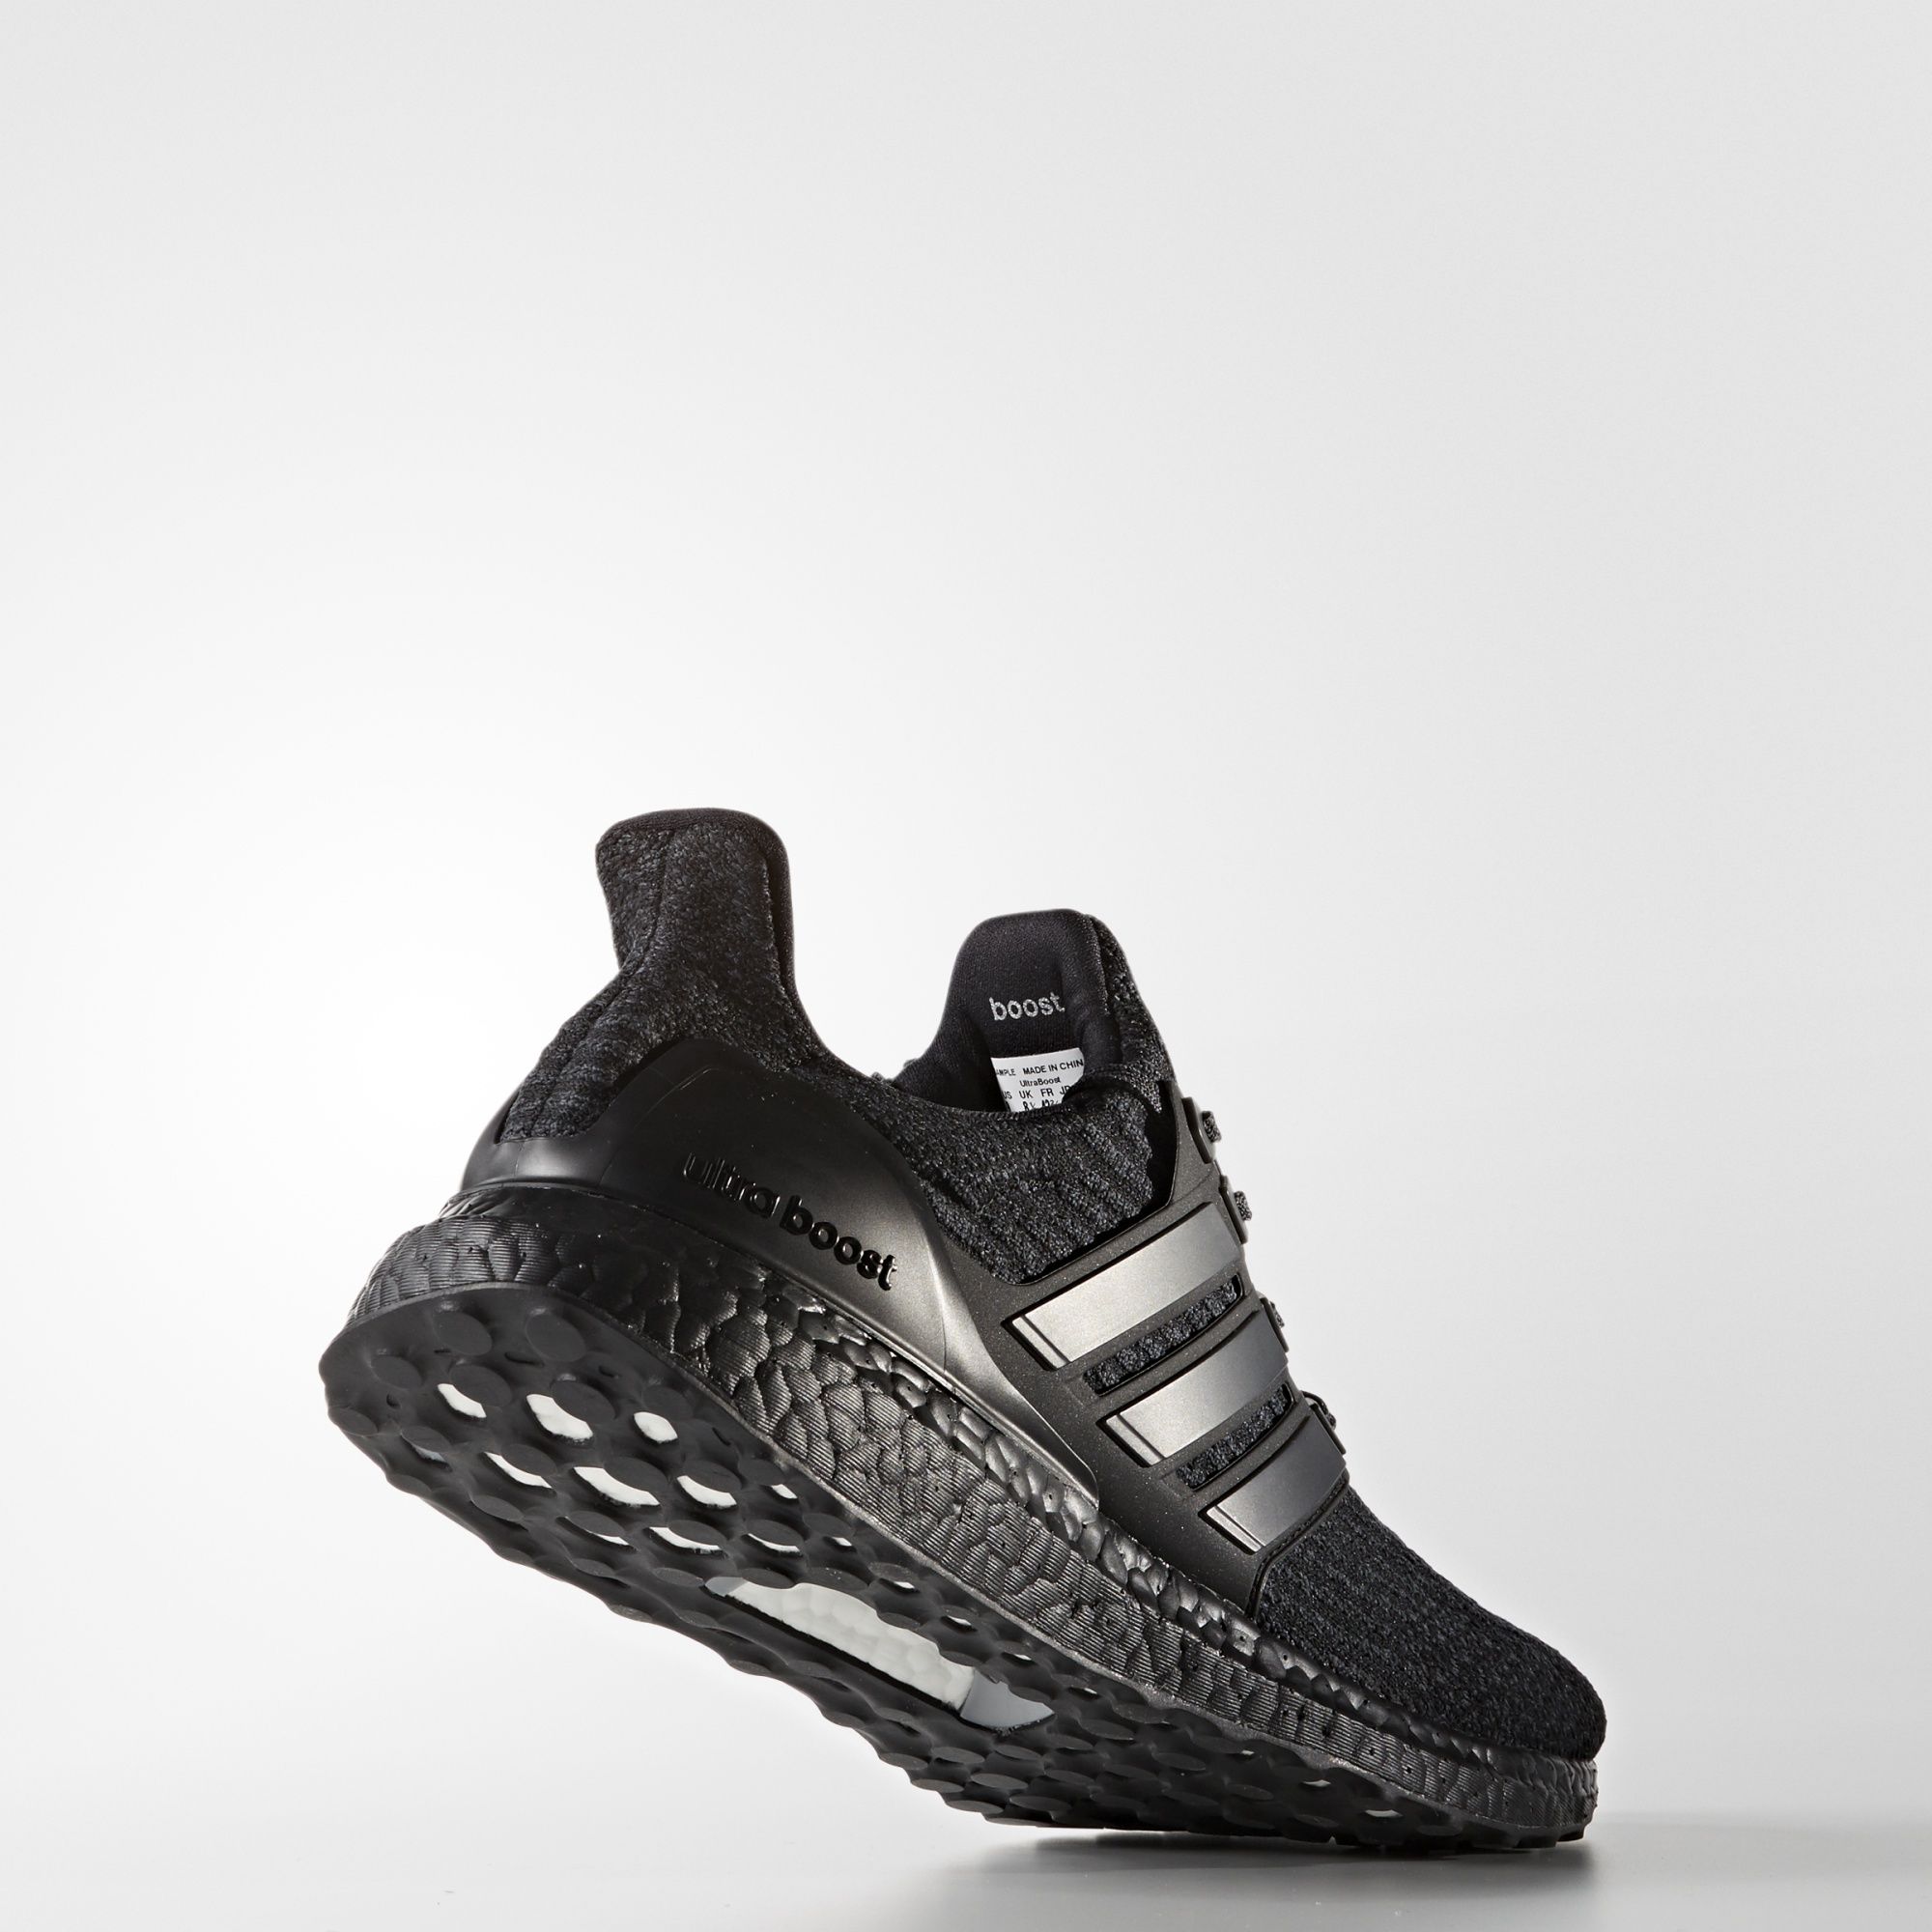 Adidas UltraBOOST
Core Black / Black / Dark Shale